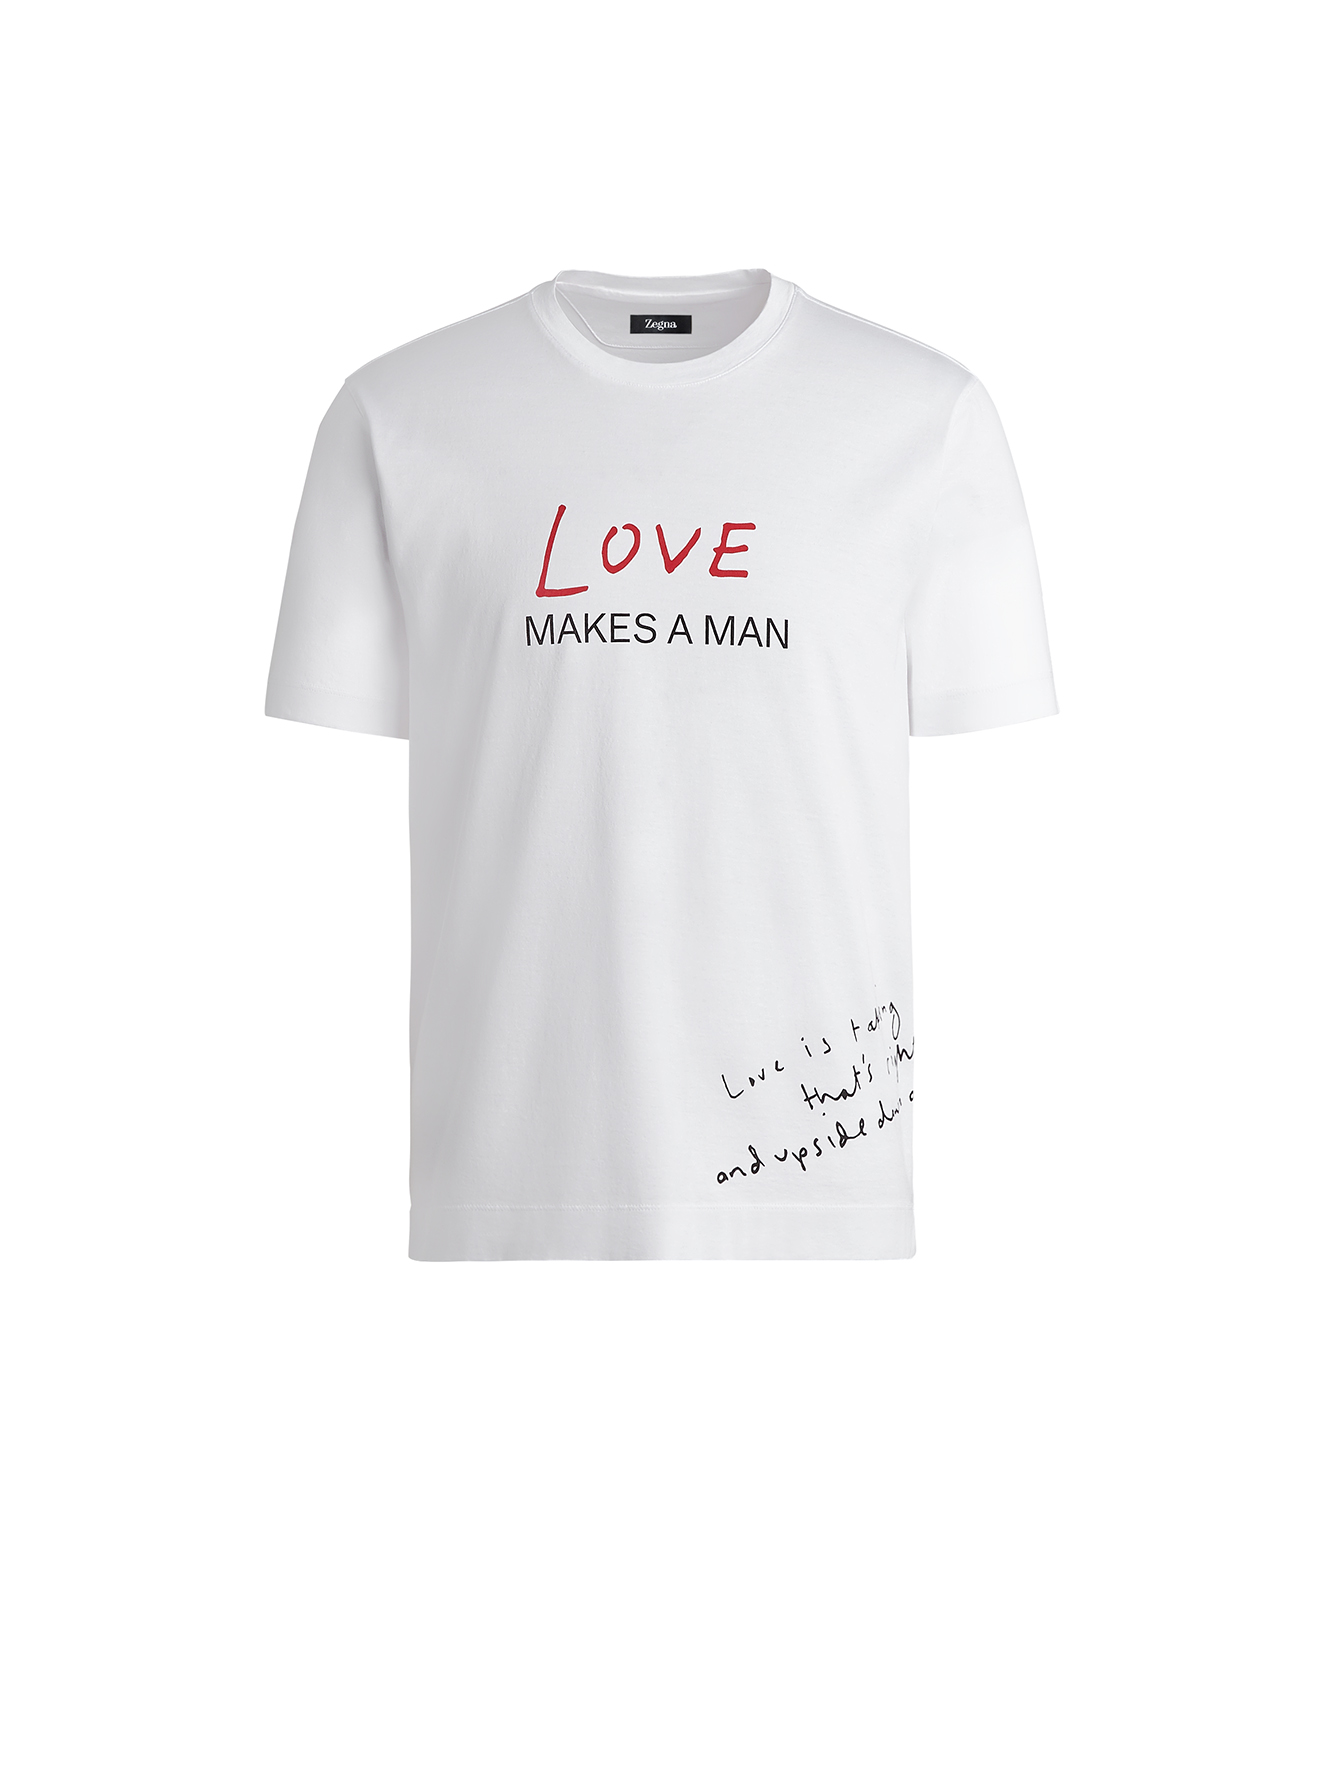 LOVE MAKE A MAN T-SHIRT